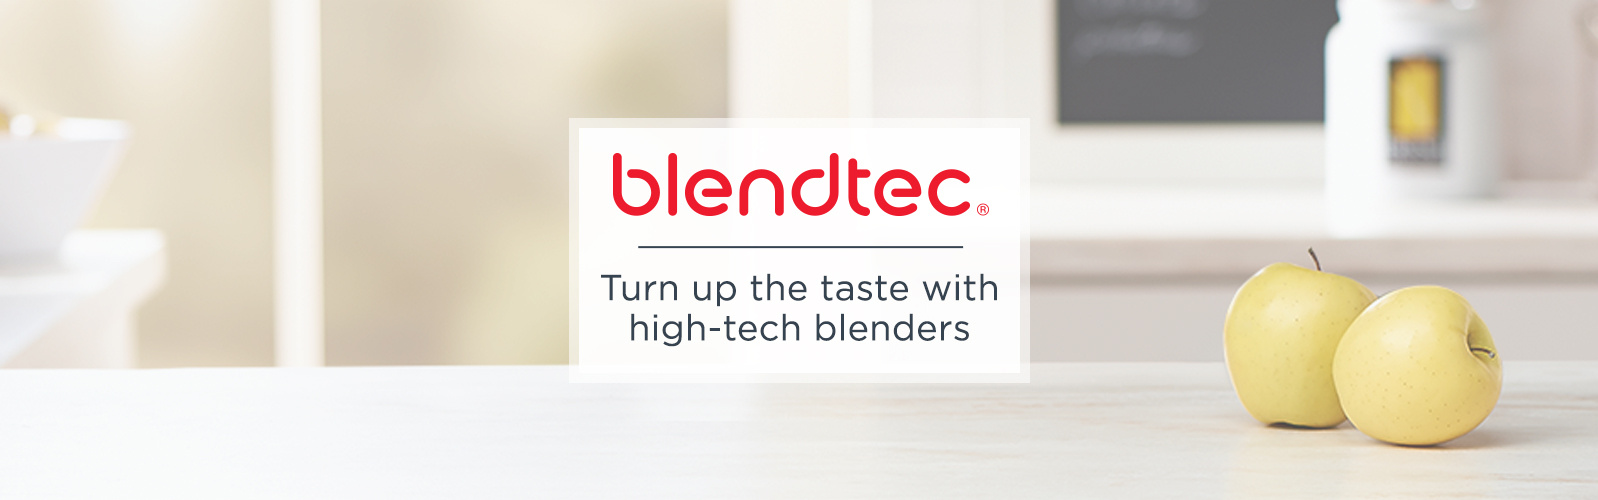 Blendtec. Turn up the taste with high-tech blenders